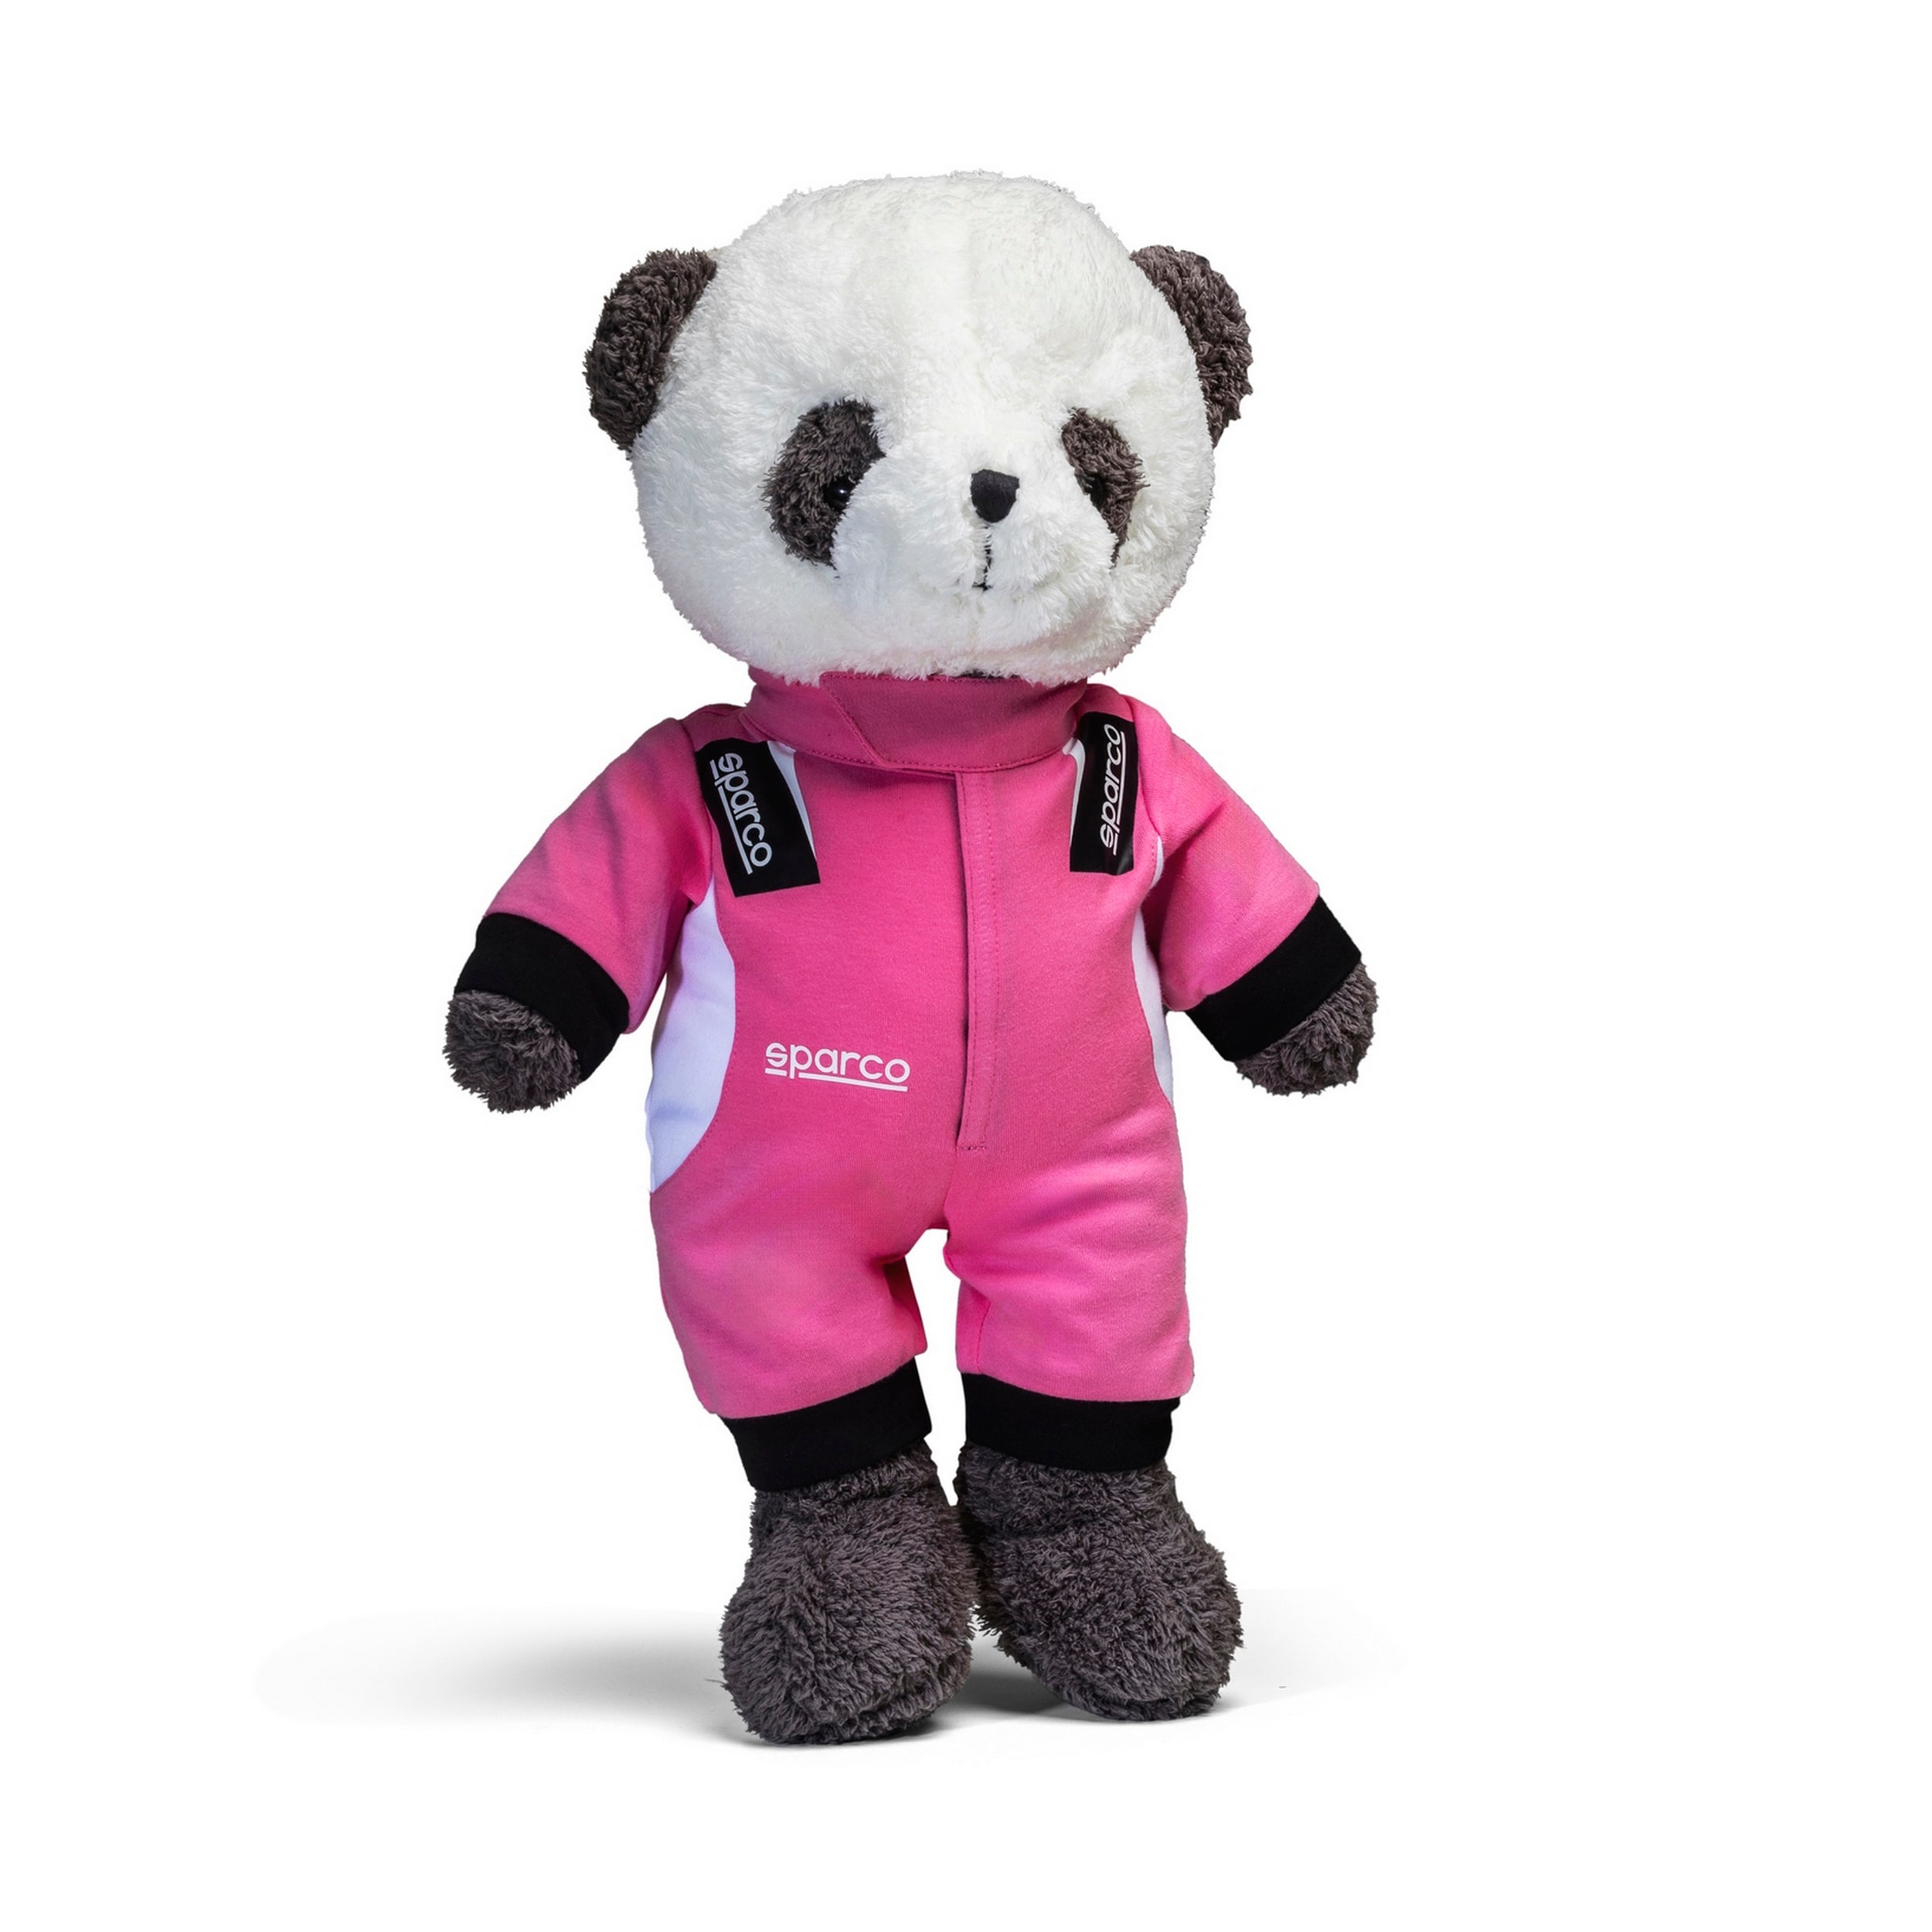 Sparco Panda Teddy Bear Maria